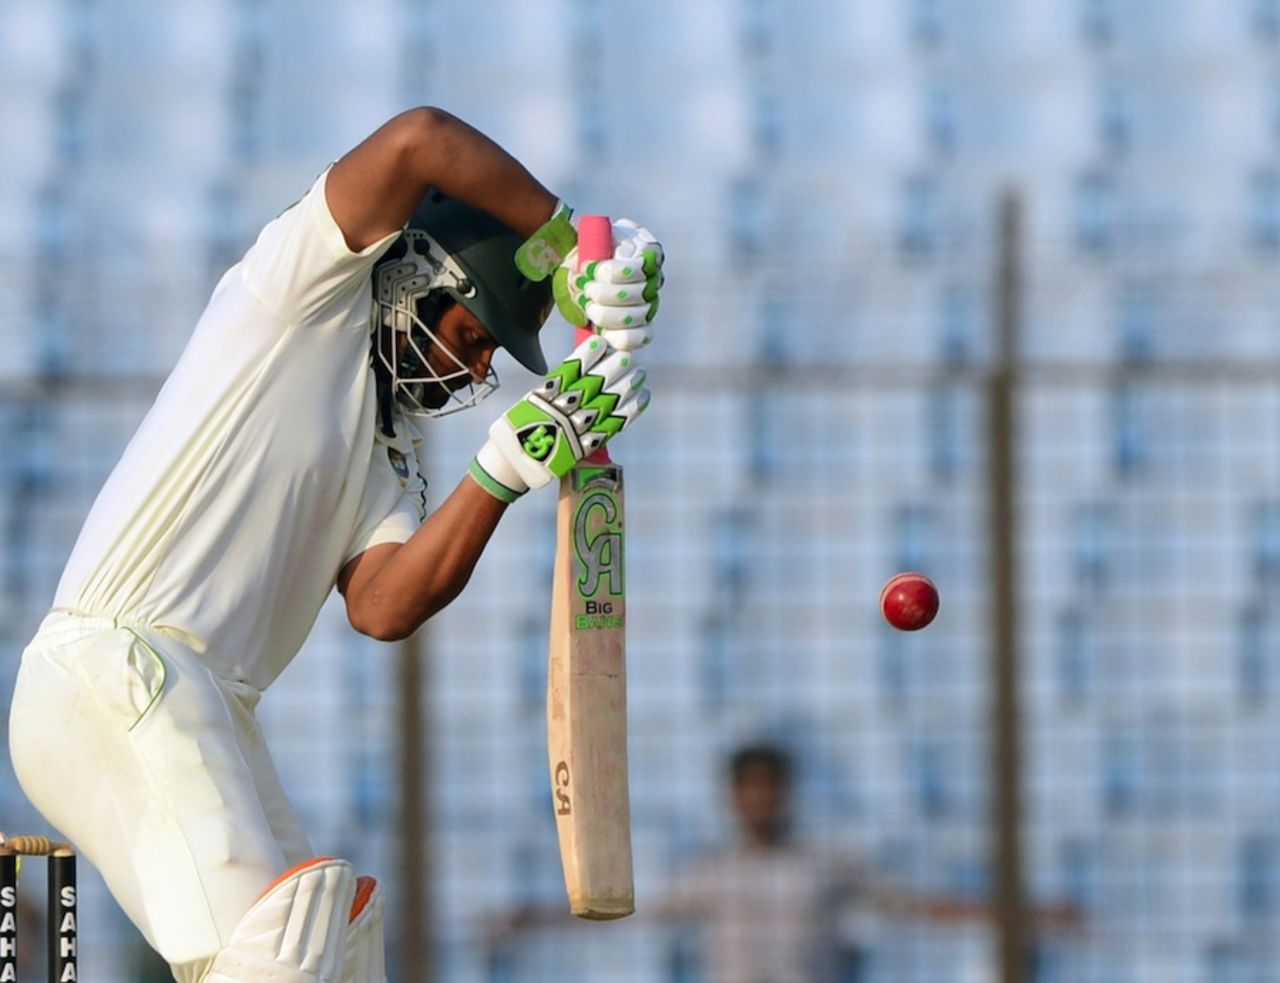 Tamim Iqbal shows solid technique, Bangladesh v Sri Lanka, 2nd Test, Chittagong, 4th day, February 7, 2014